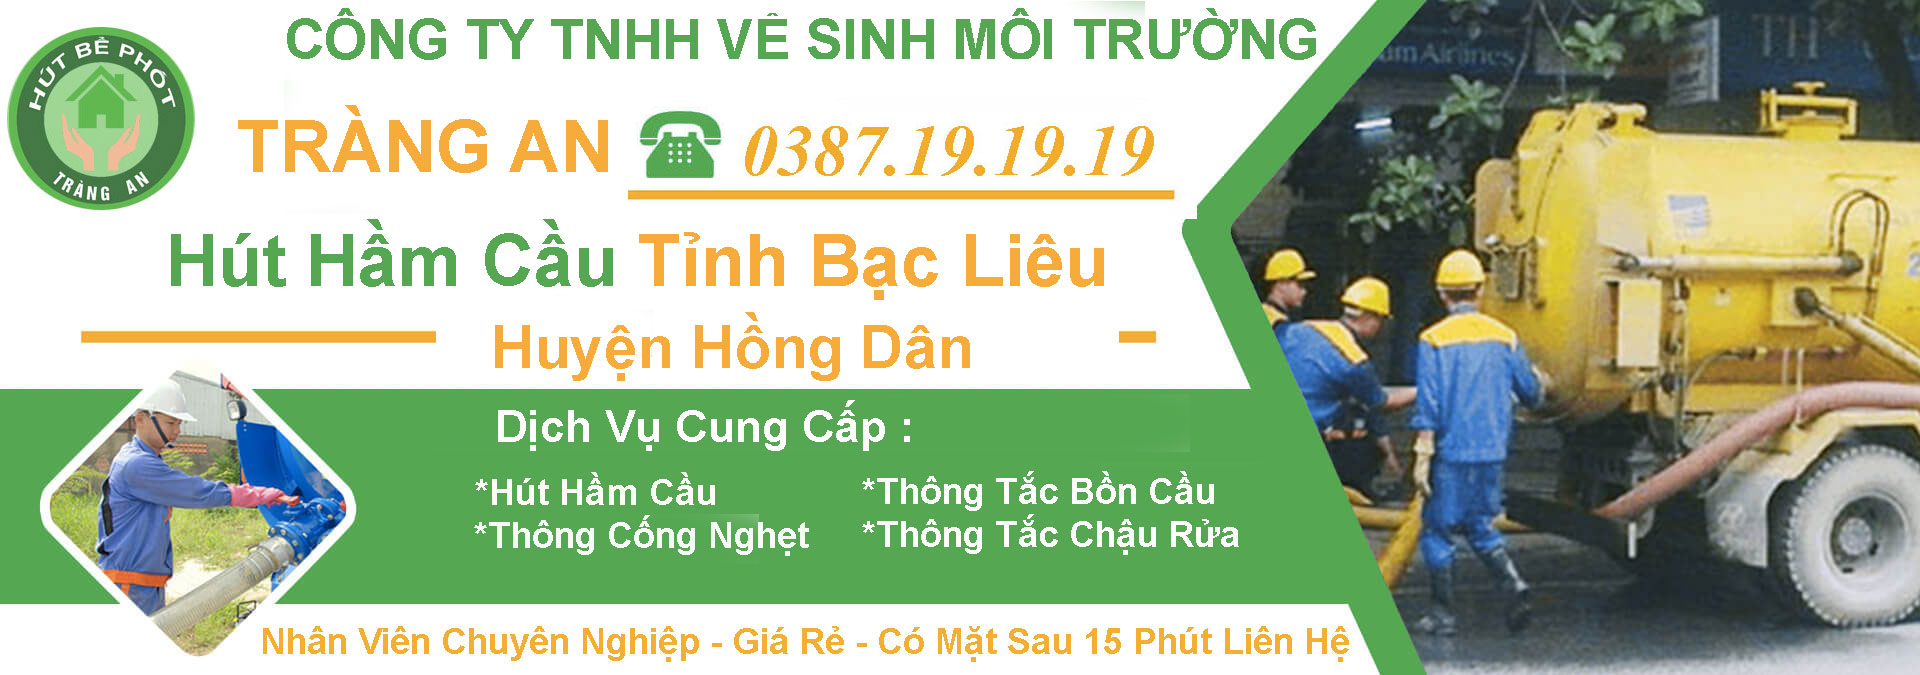 Hut Ham Cau Bac Lieu Hong Dan